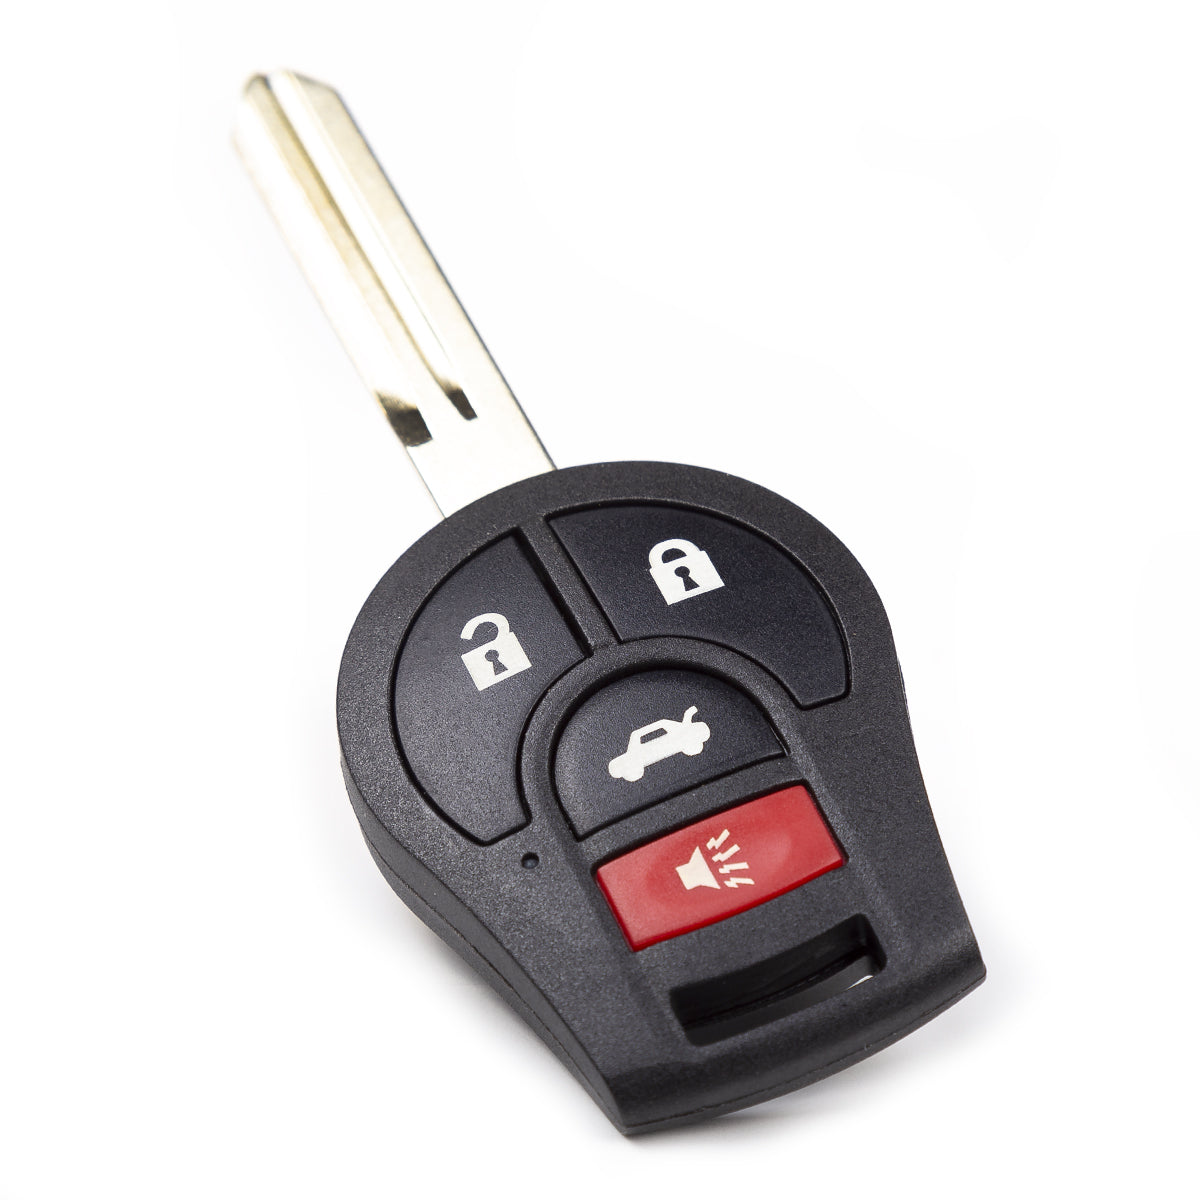 2014 Nissan Sentra Key Fob - Aftermarket - 4 Buttons Fob FCC# CWTWB1U751 - ID46 Chip